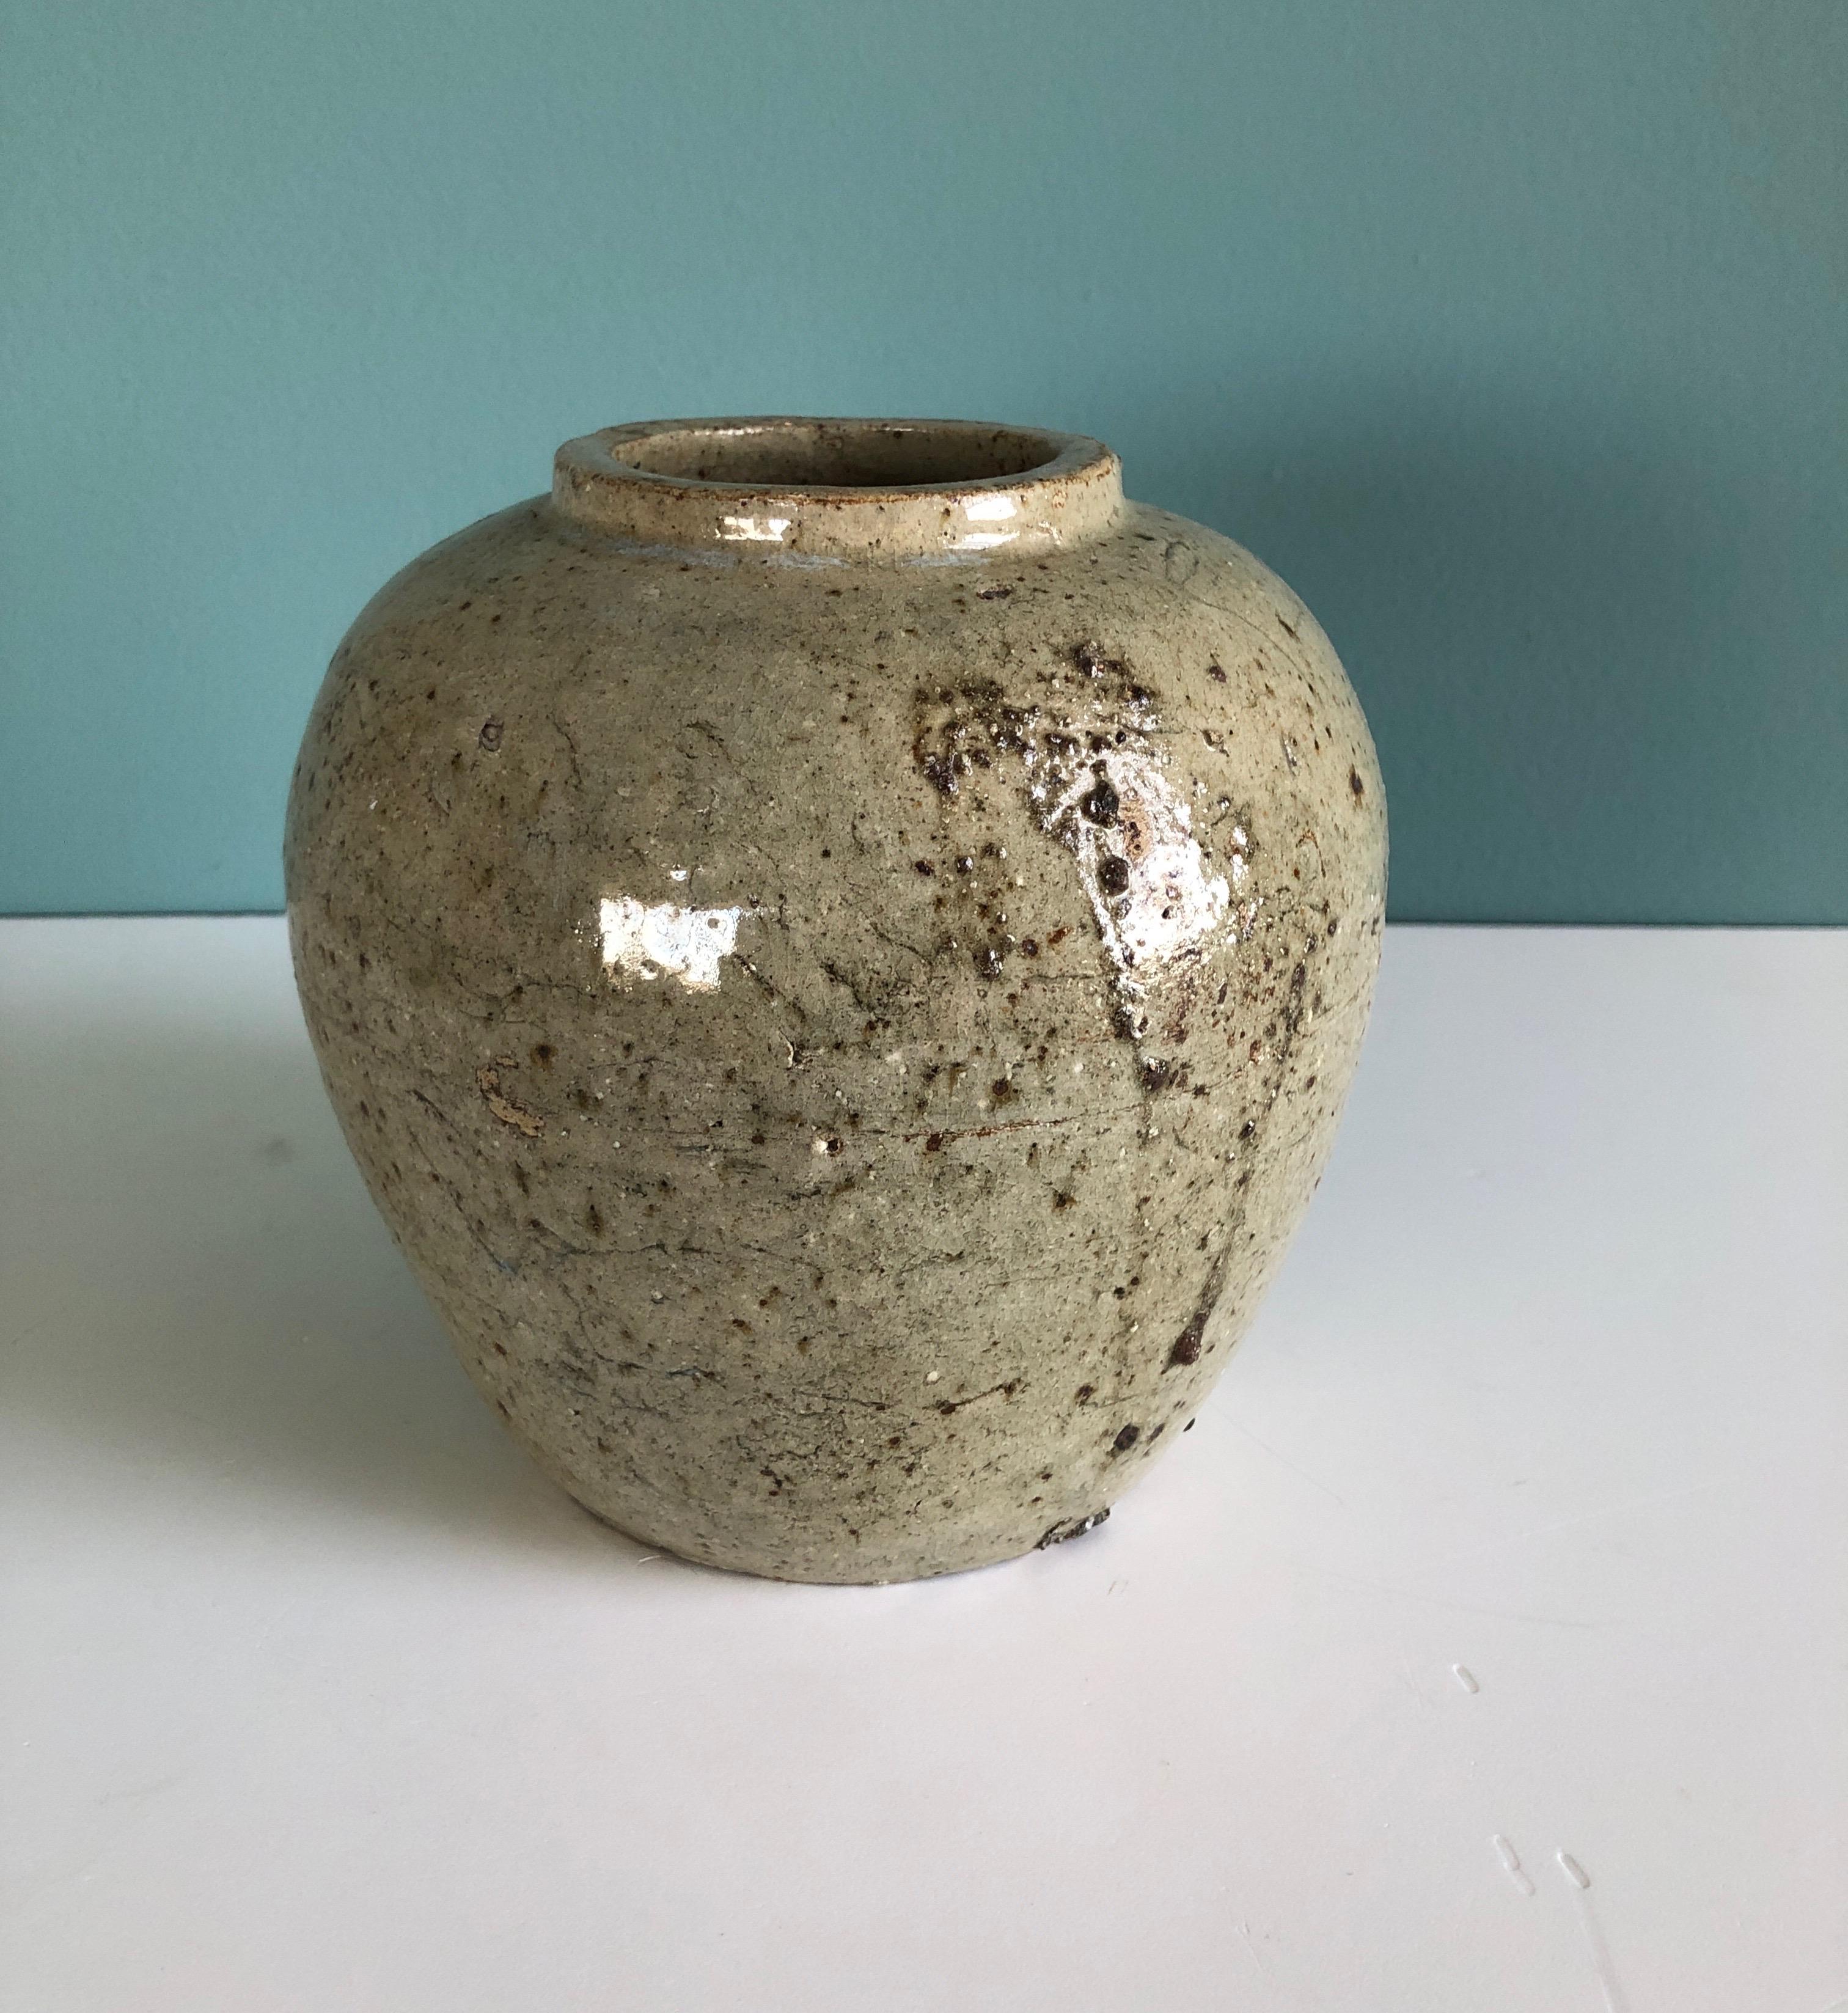 Vintage round glazed Asian vase.
Size: 6.5”D x 6.5”H.